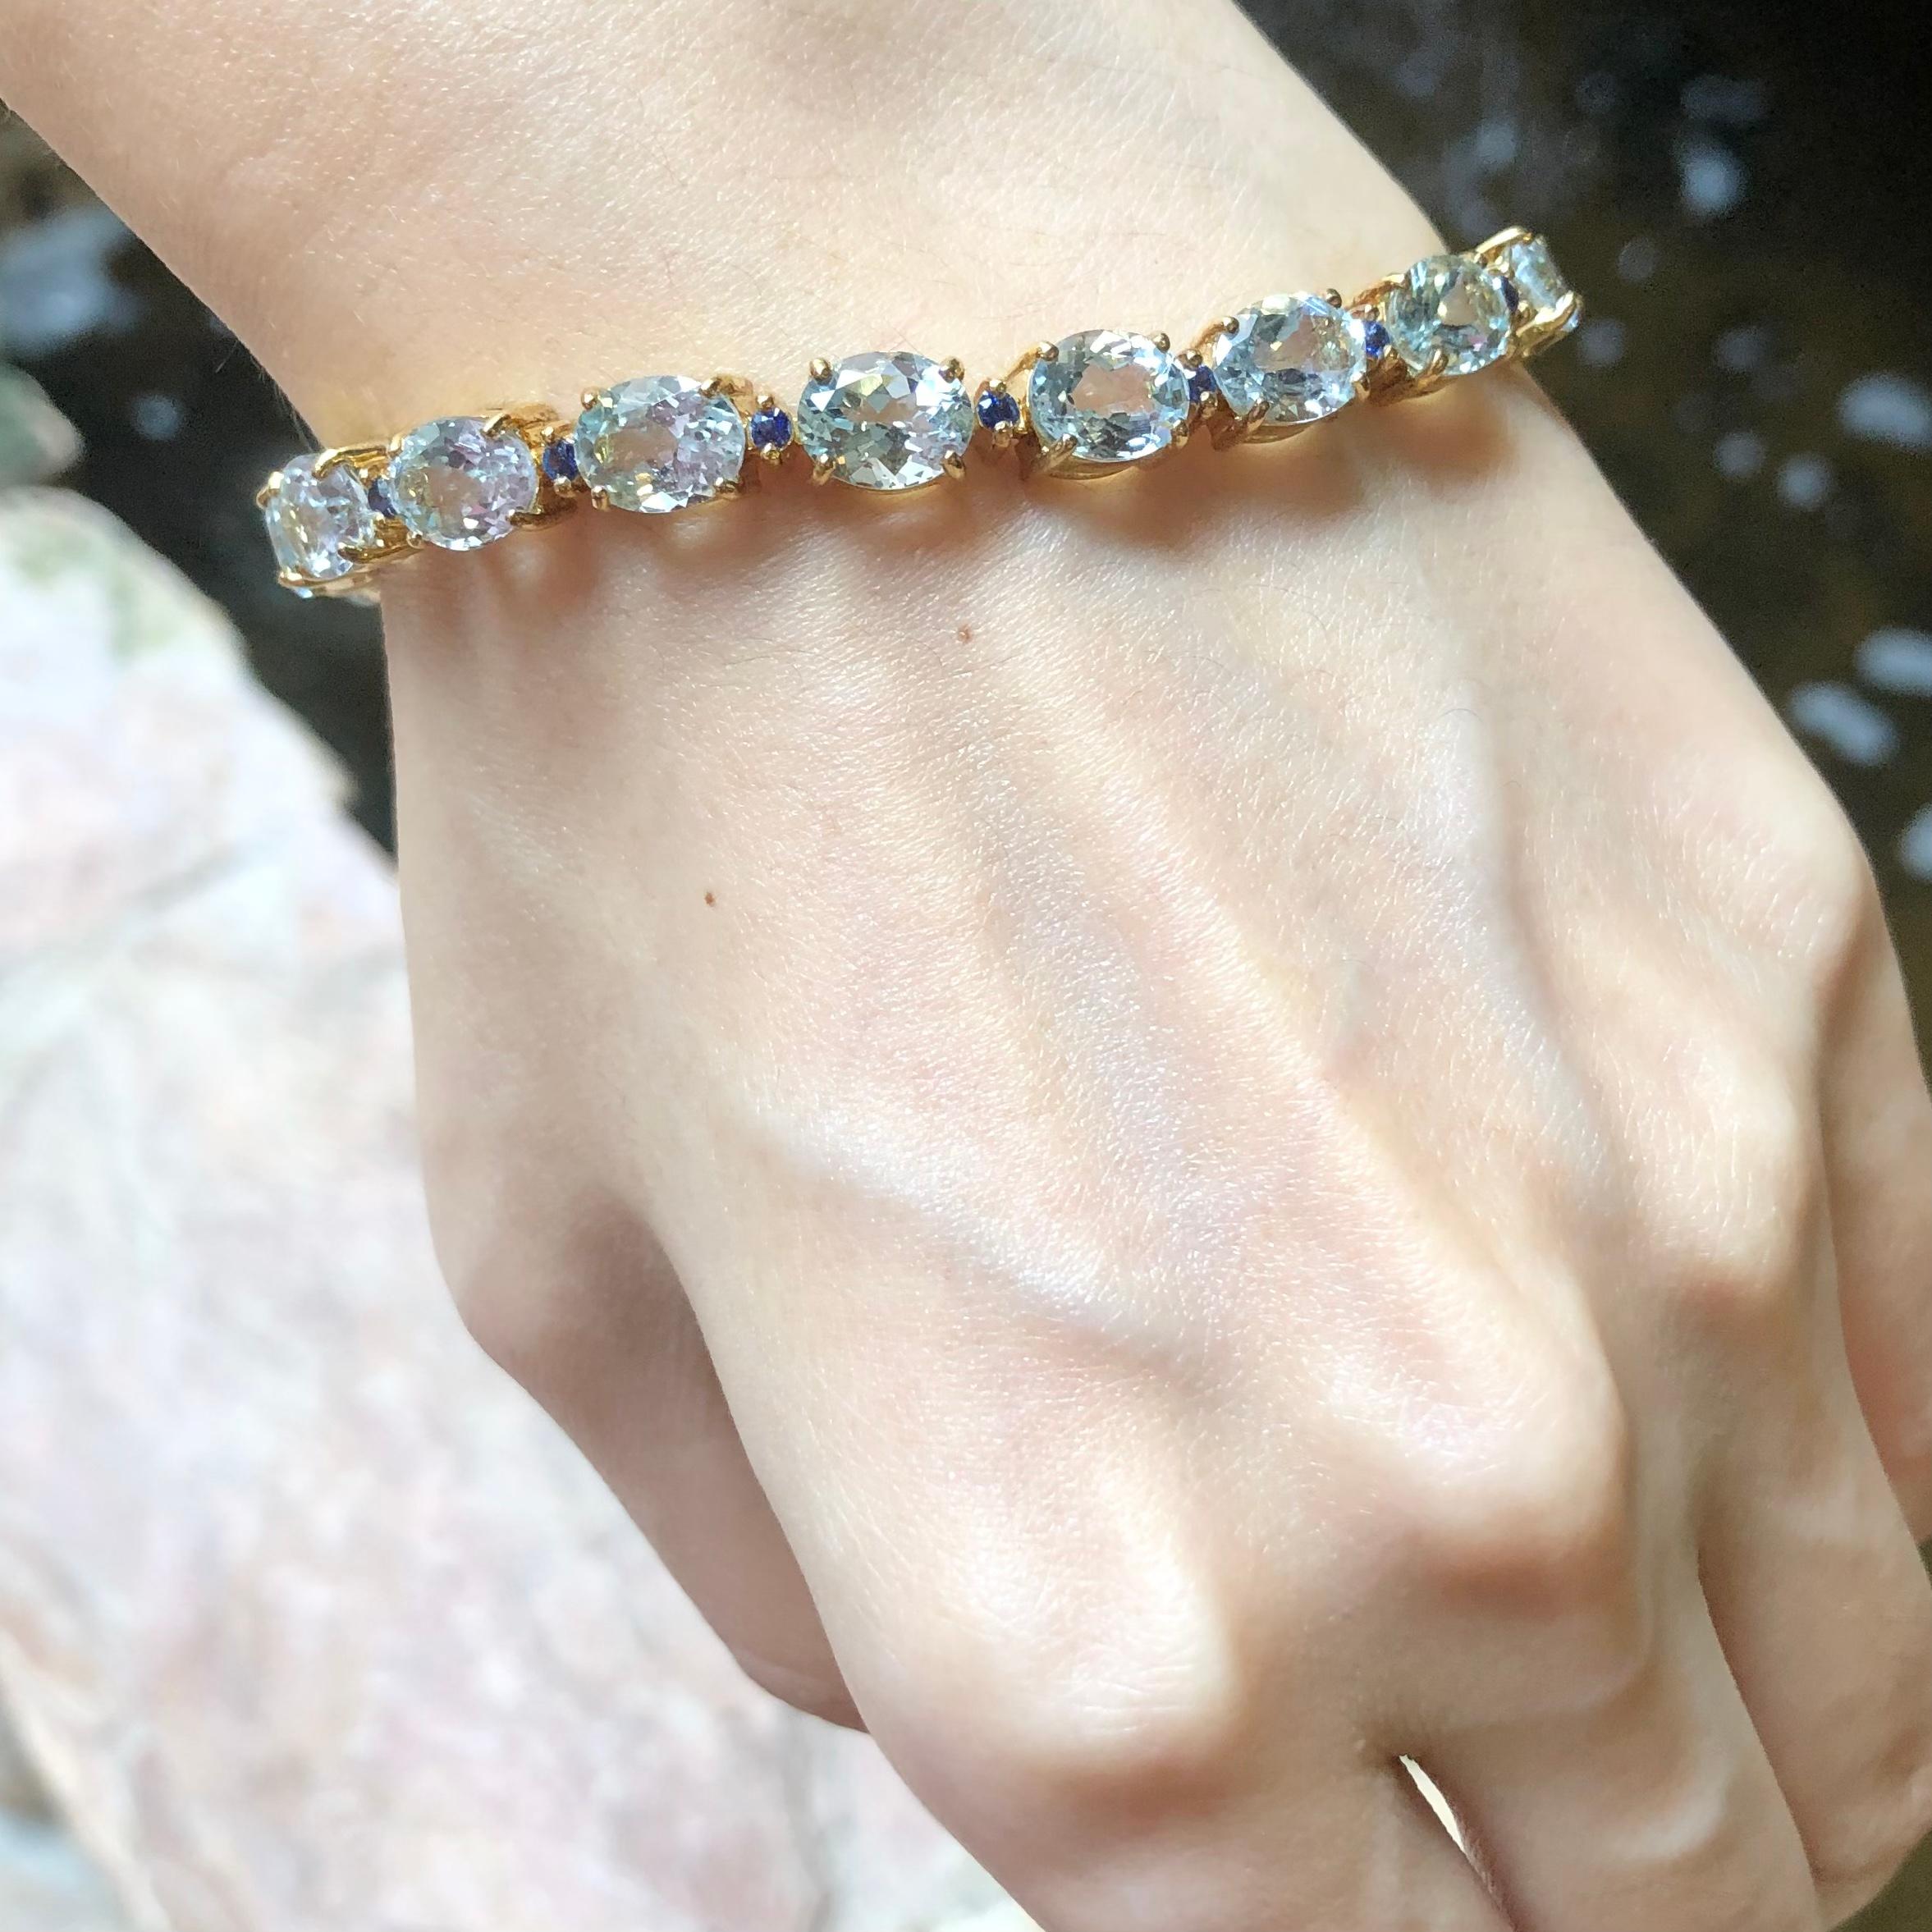 Aquamarine 21.59 carats with Blue Sapphire  0.70 carat Bracelet set in 18 Karat Gold Settings

Width:  0.6 cm 
Length: 18.0 cm
Total Weight: 22.46 grams

